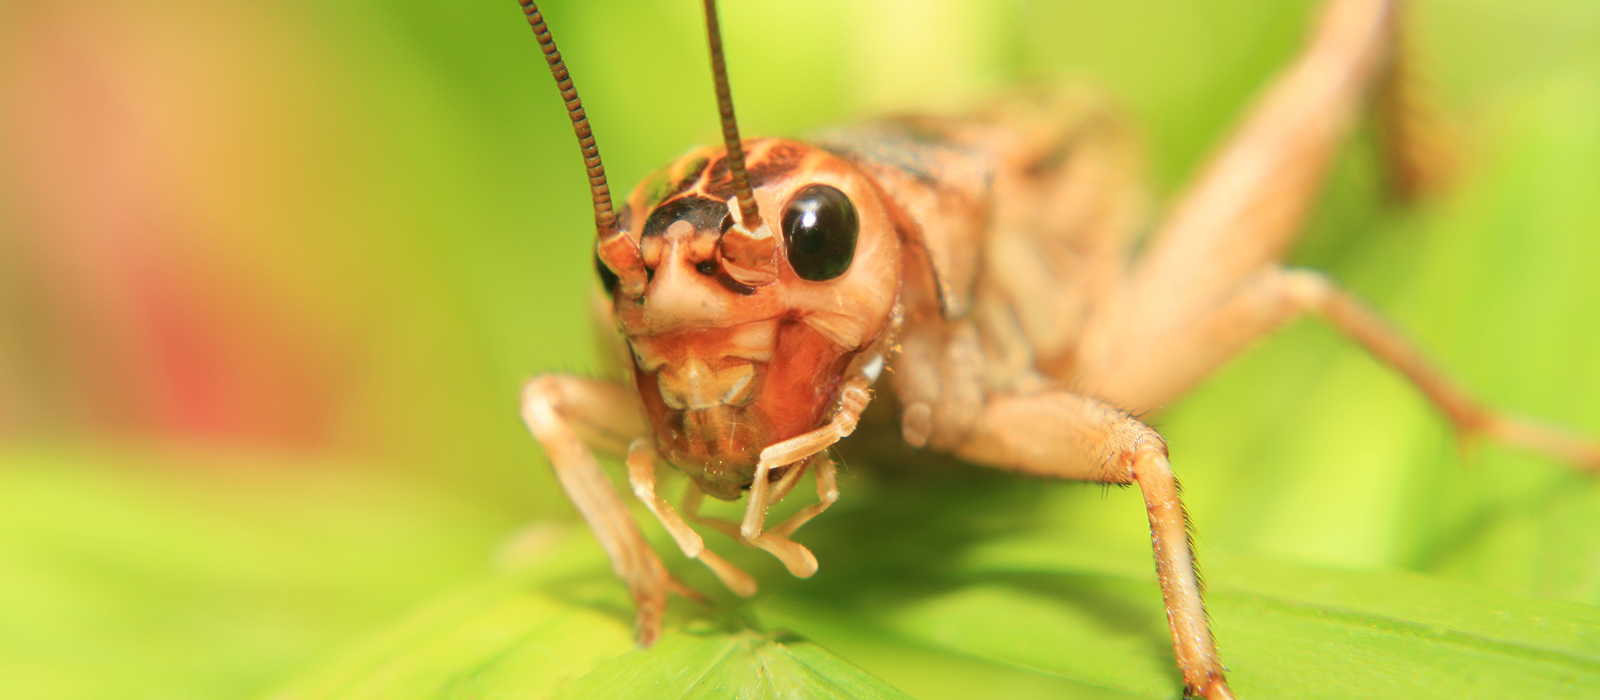 A cricket on a leaf